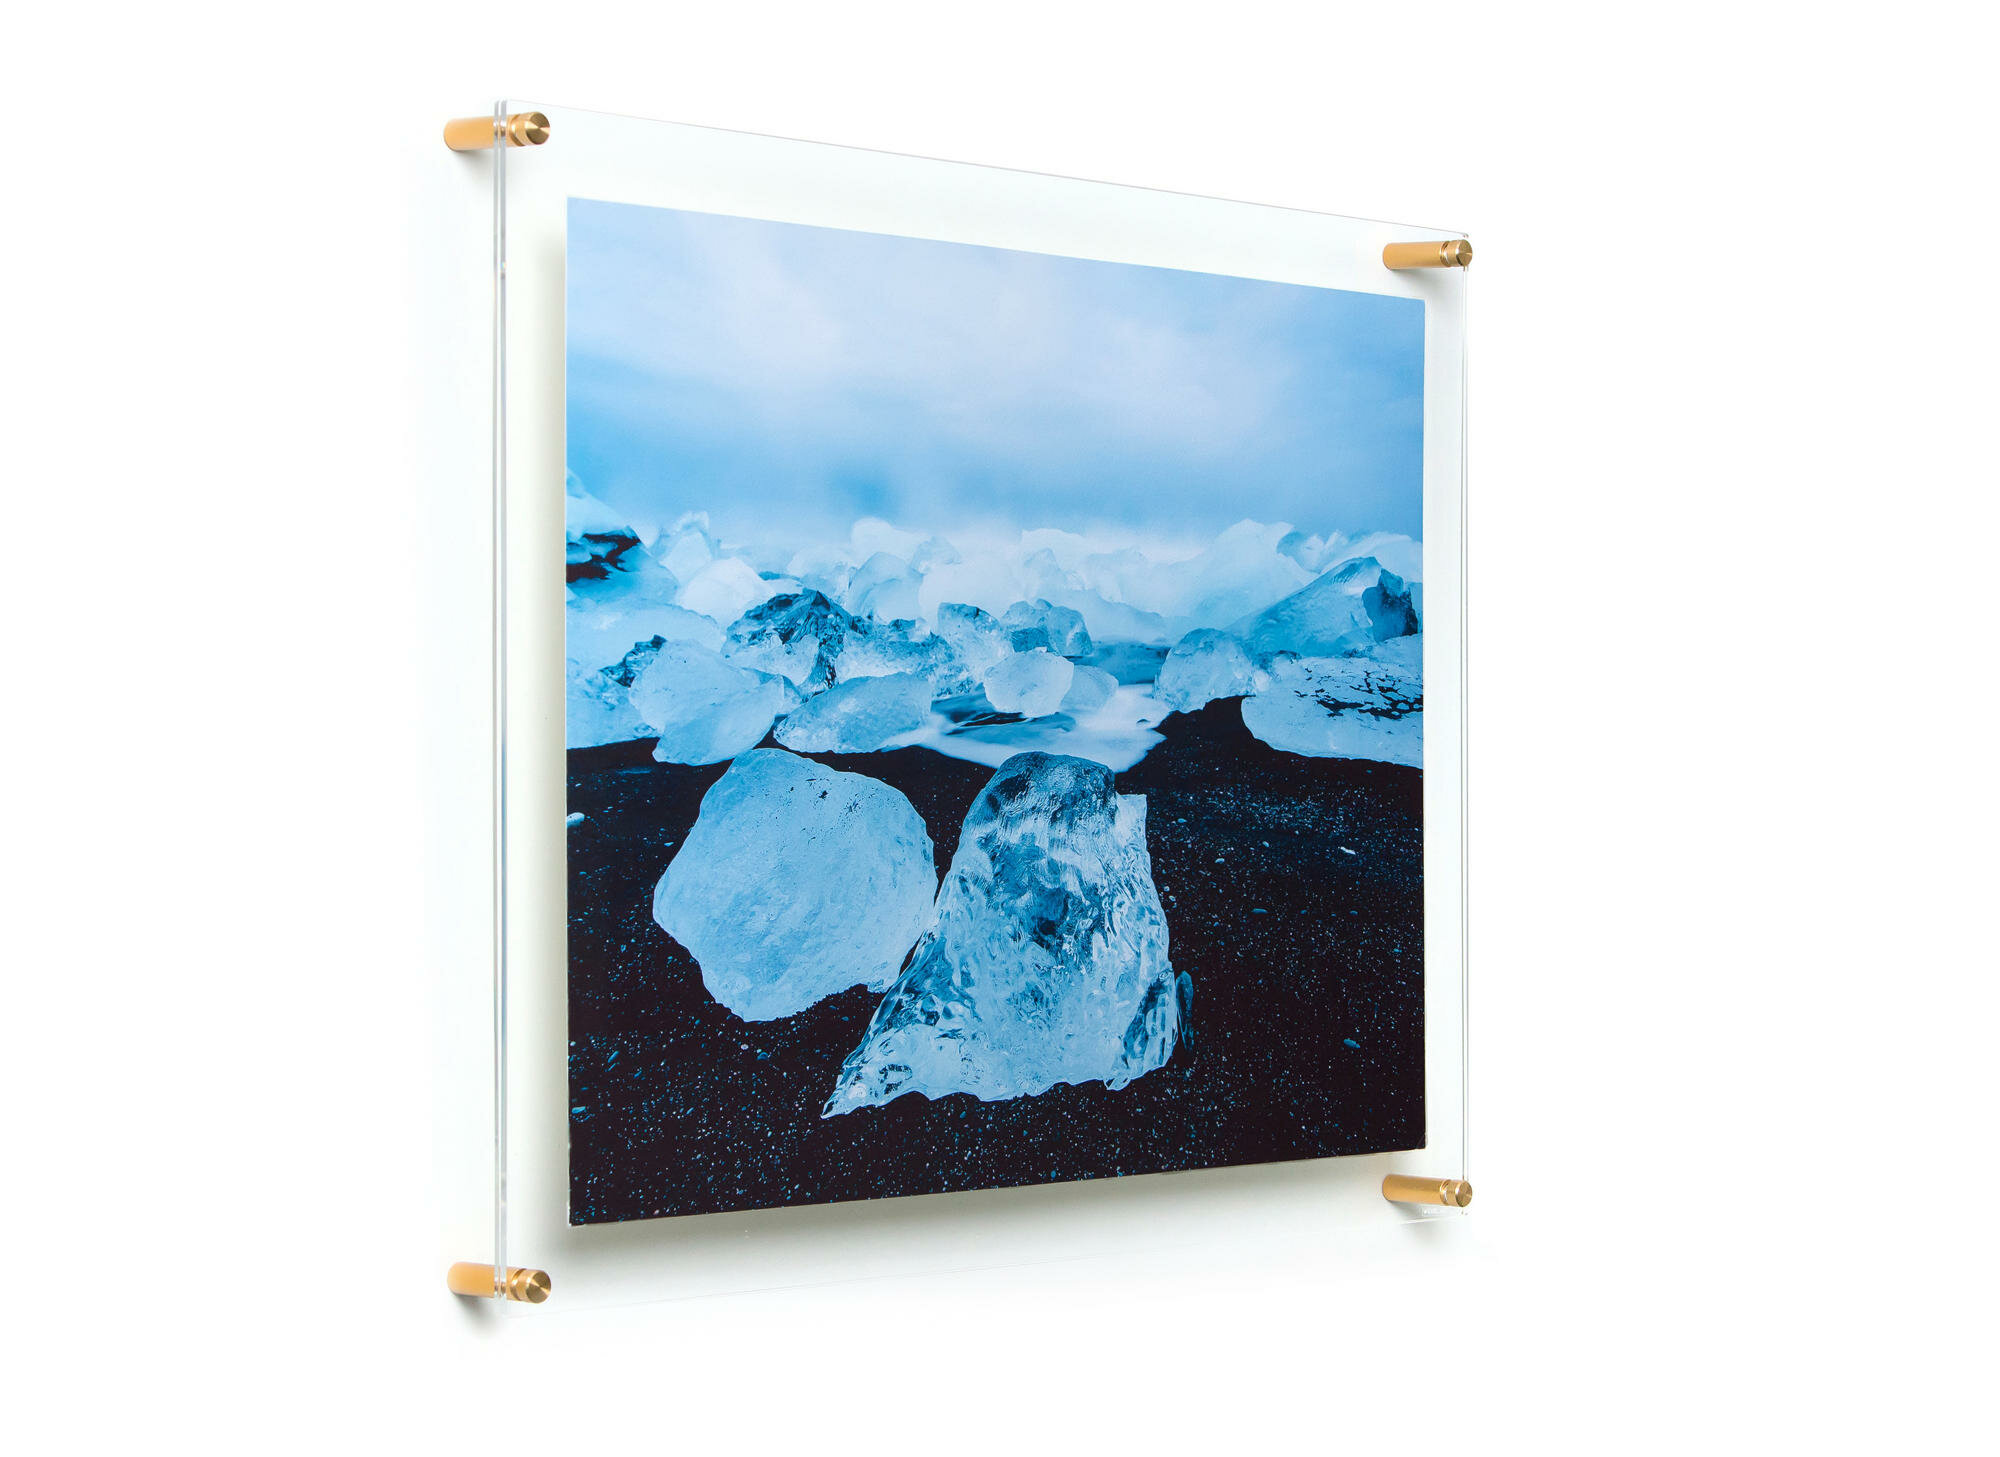 Wexel Art 19x23 Double Panel Floating Acrylic Frame for 16x20 Photo